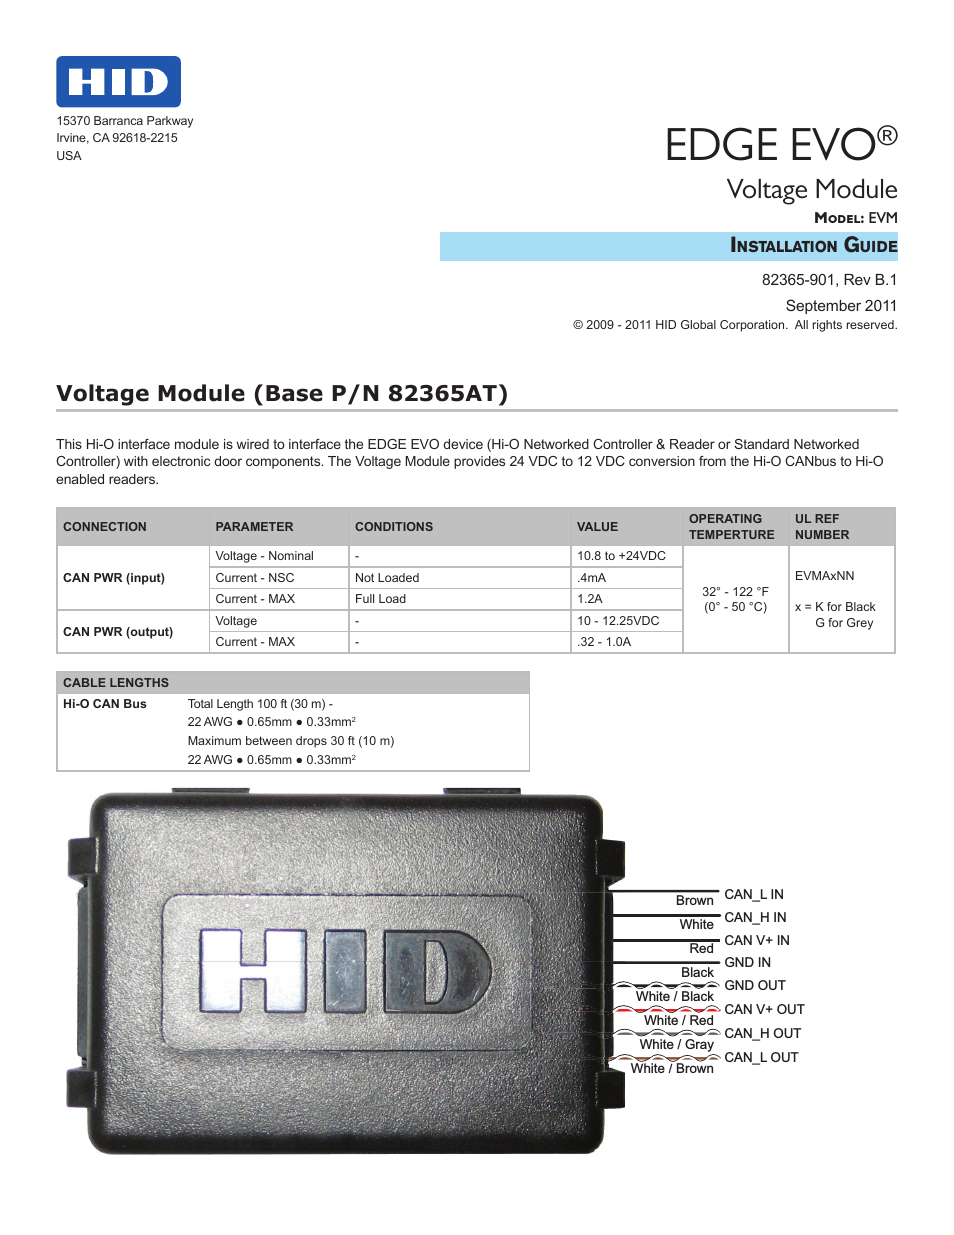 EDGE EVO EVM Hi-O Voltage Module Installation Guide